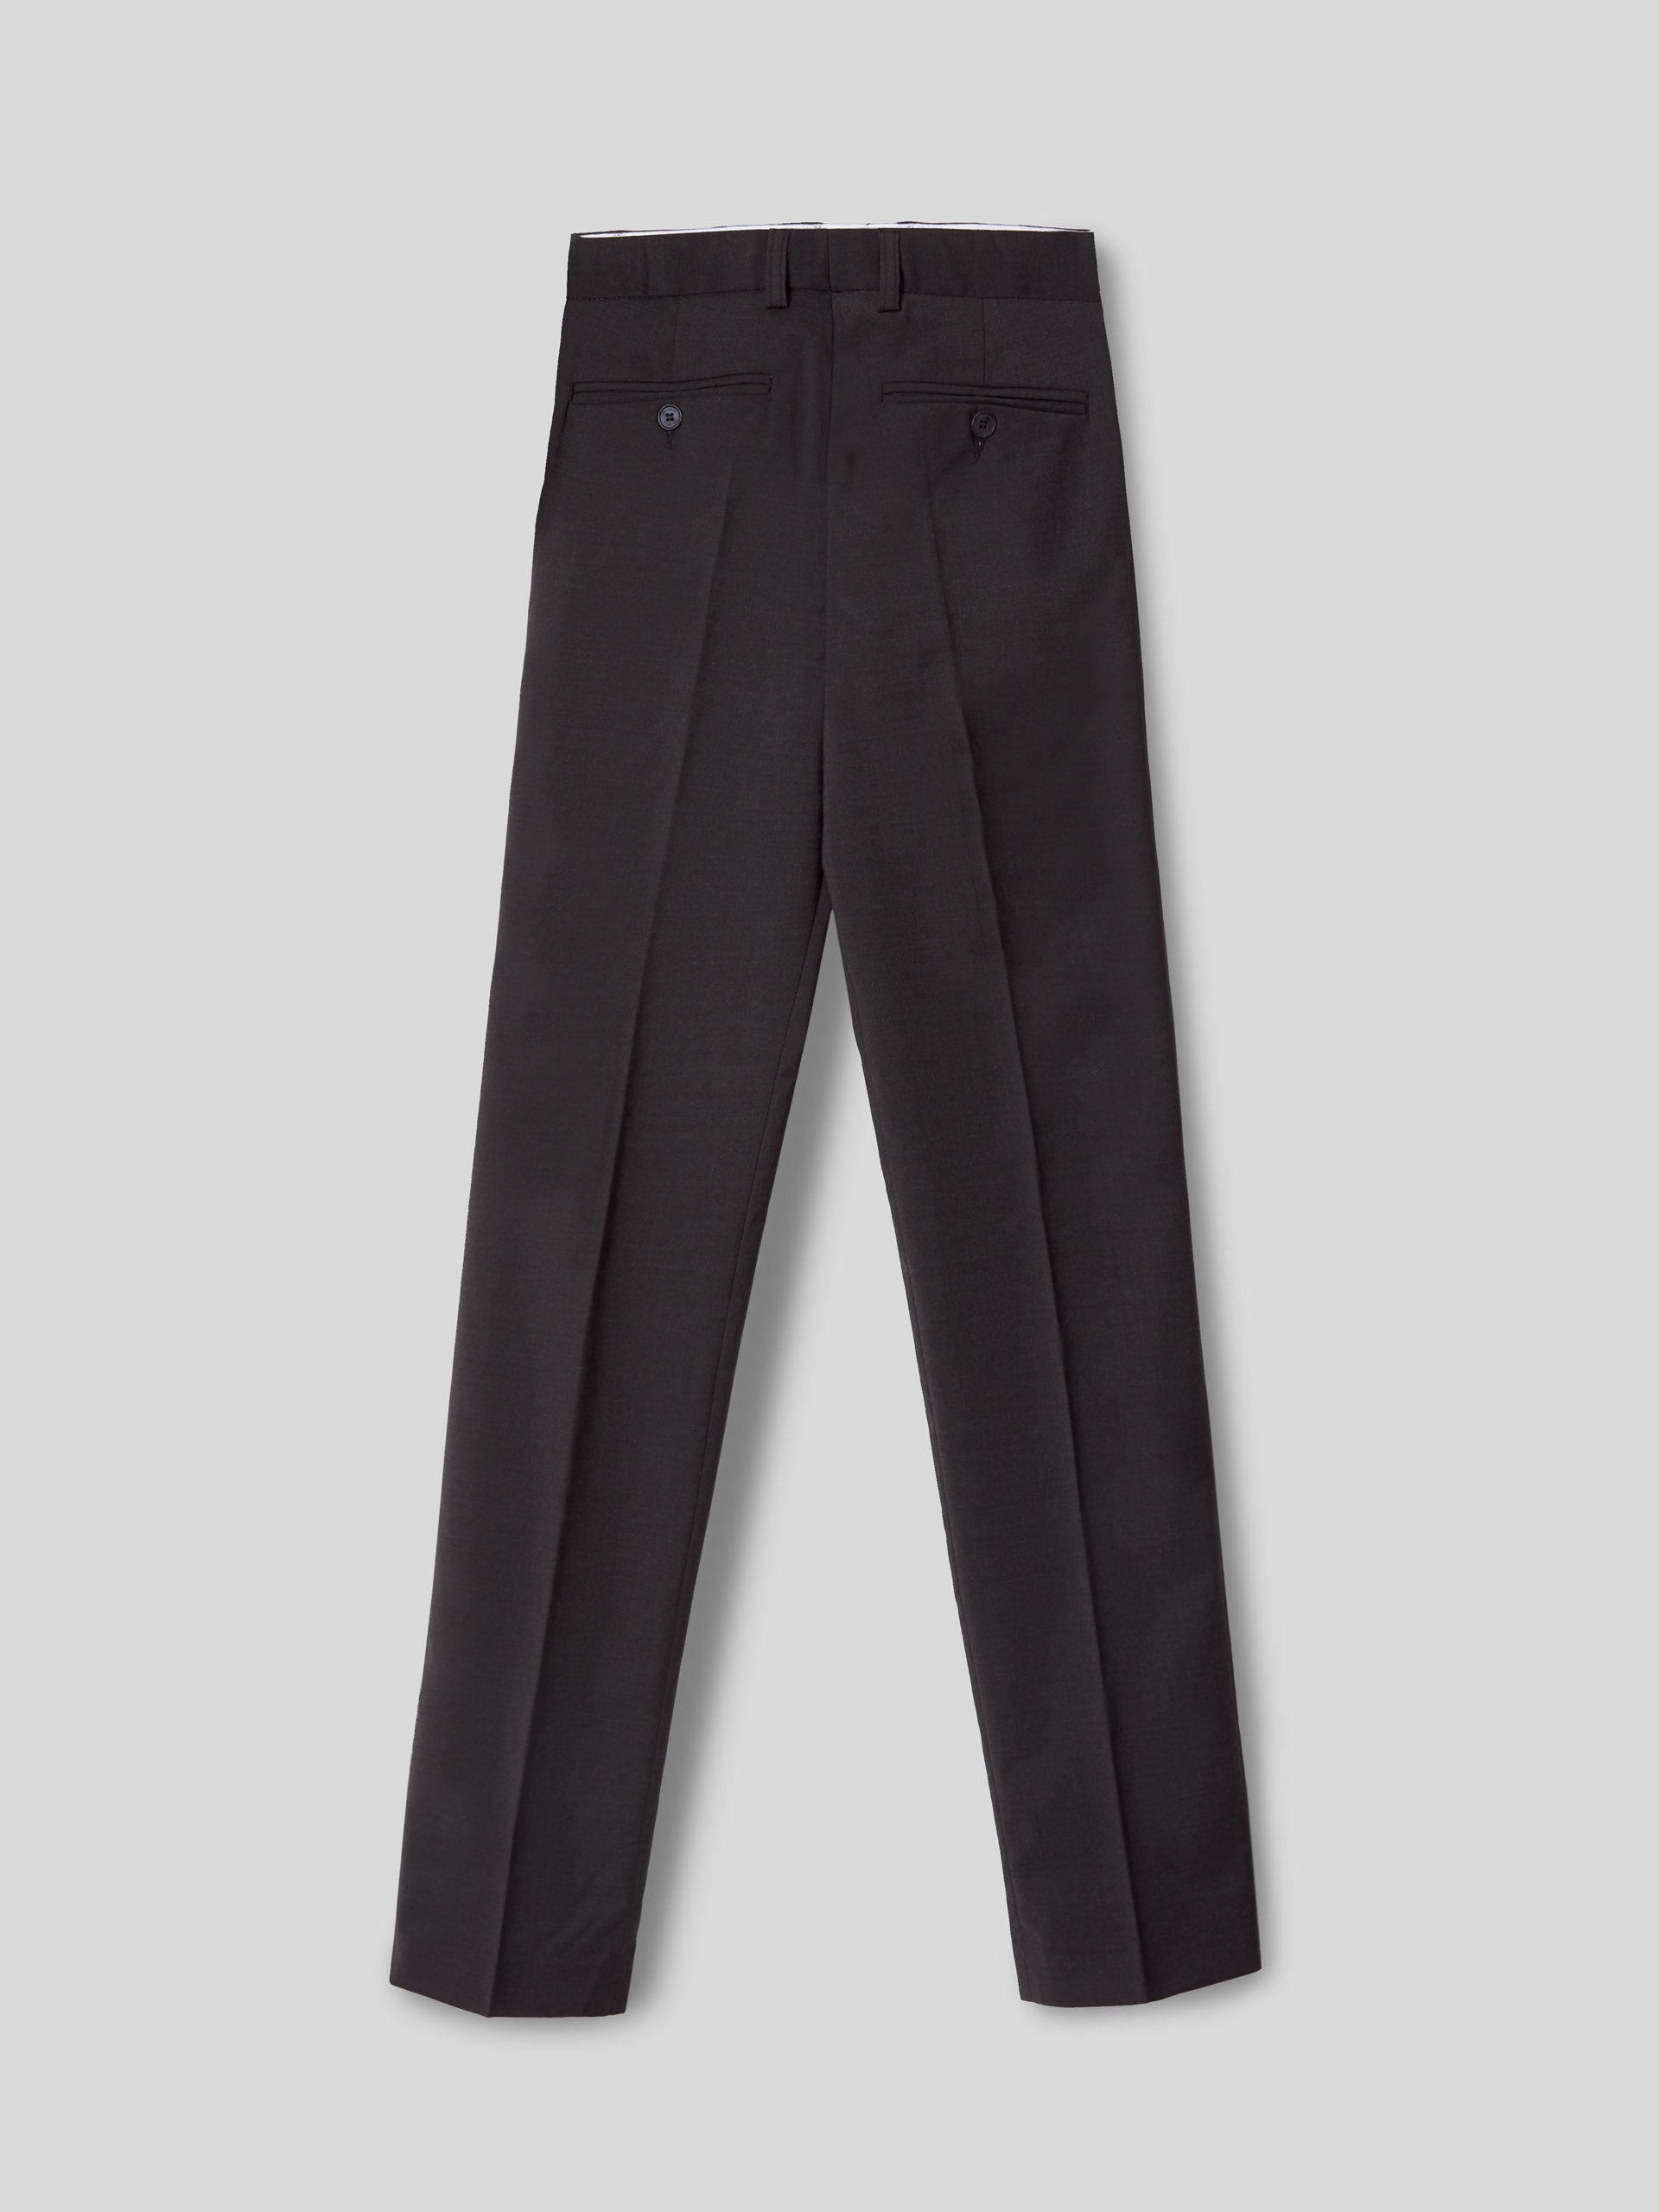 Pantalon vestir classic gris oscuro